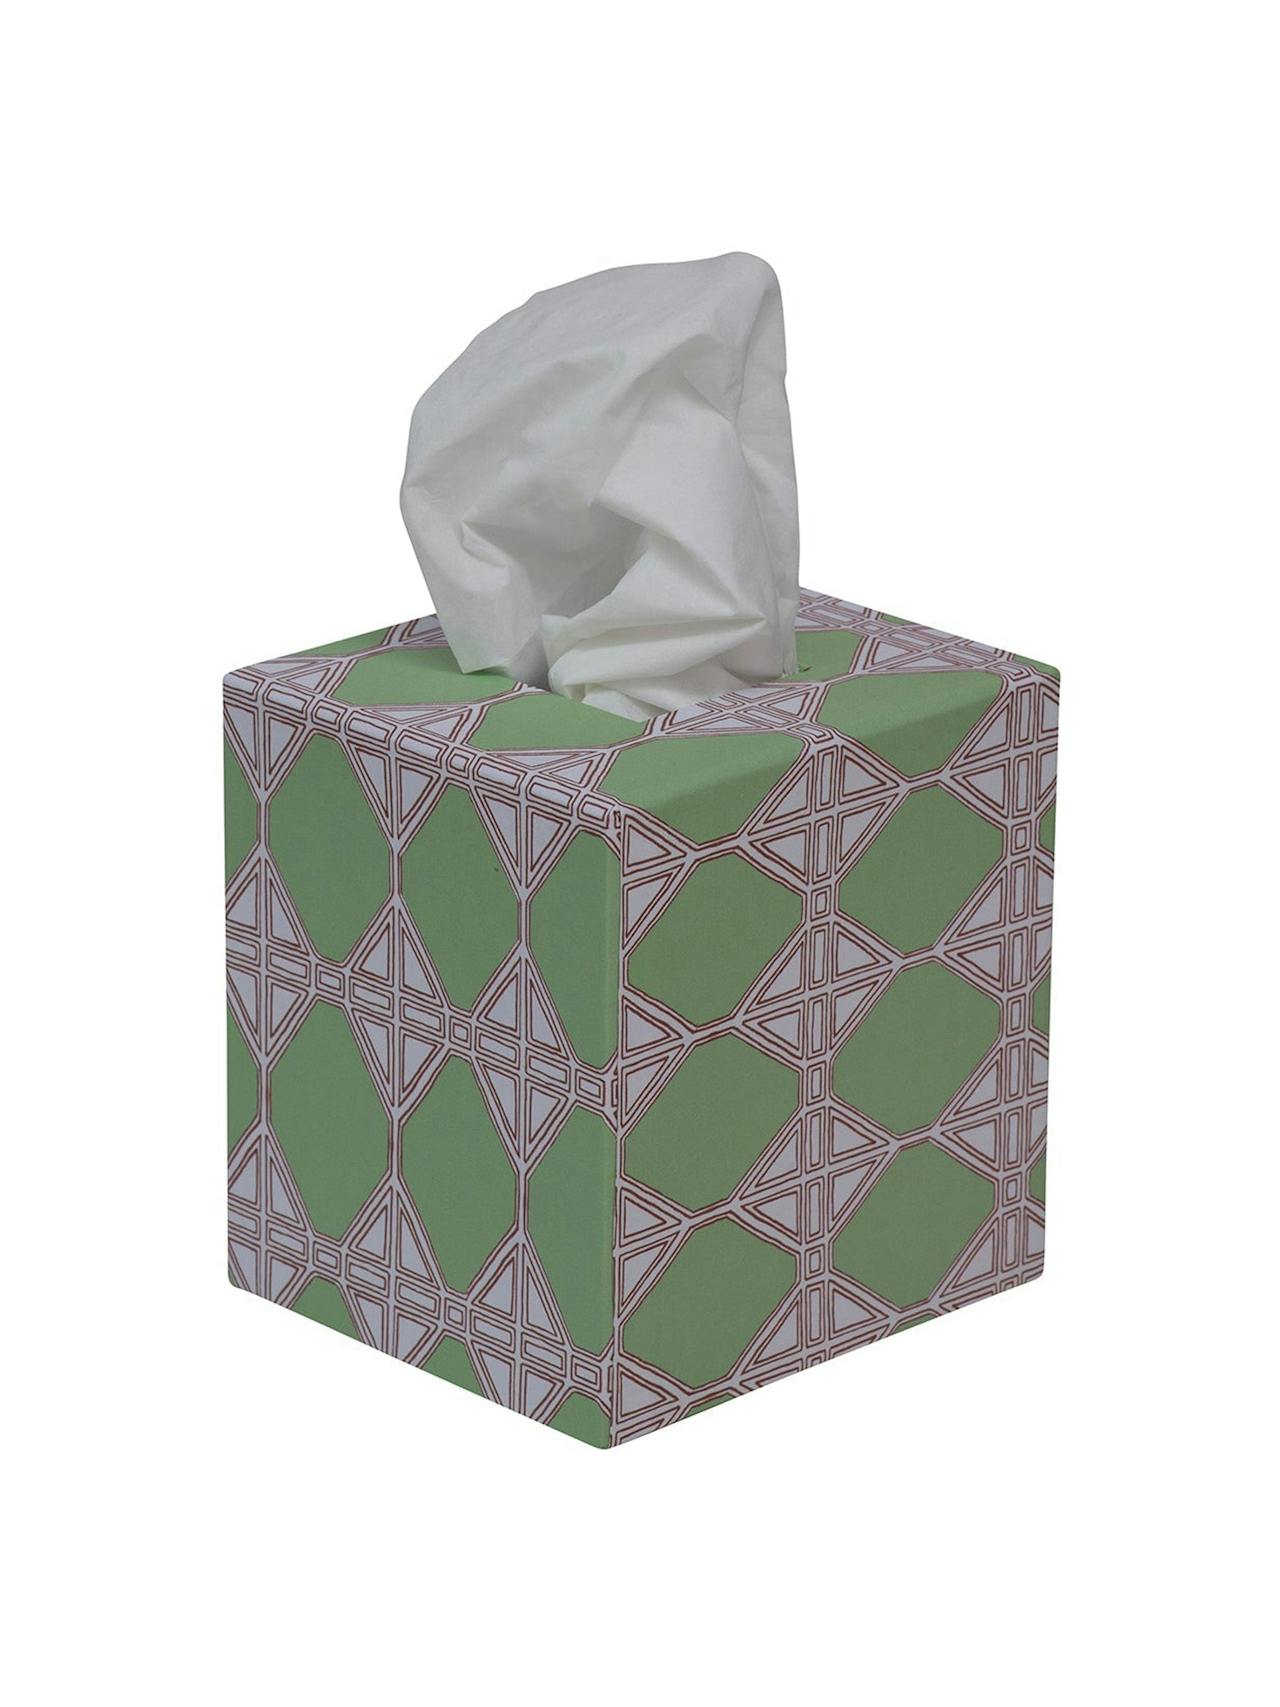 Romarong loko green tissue box cover